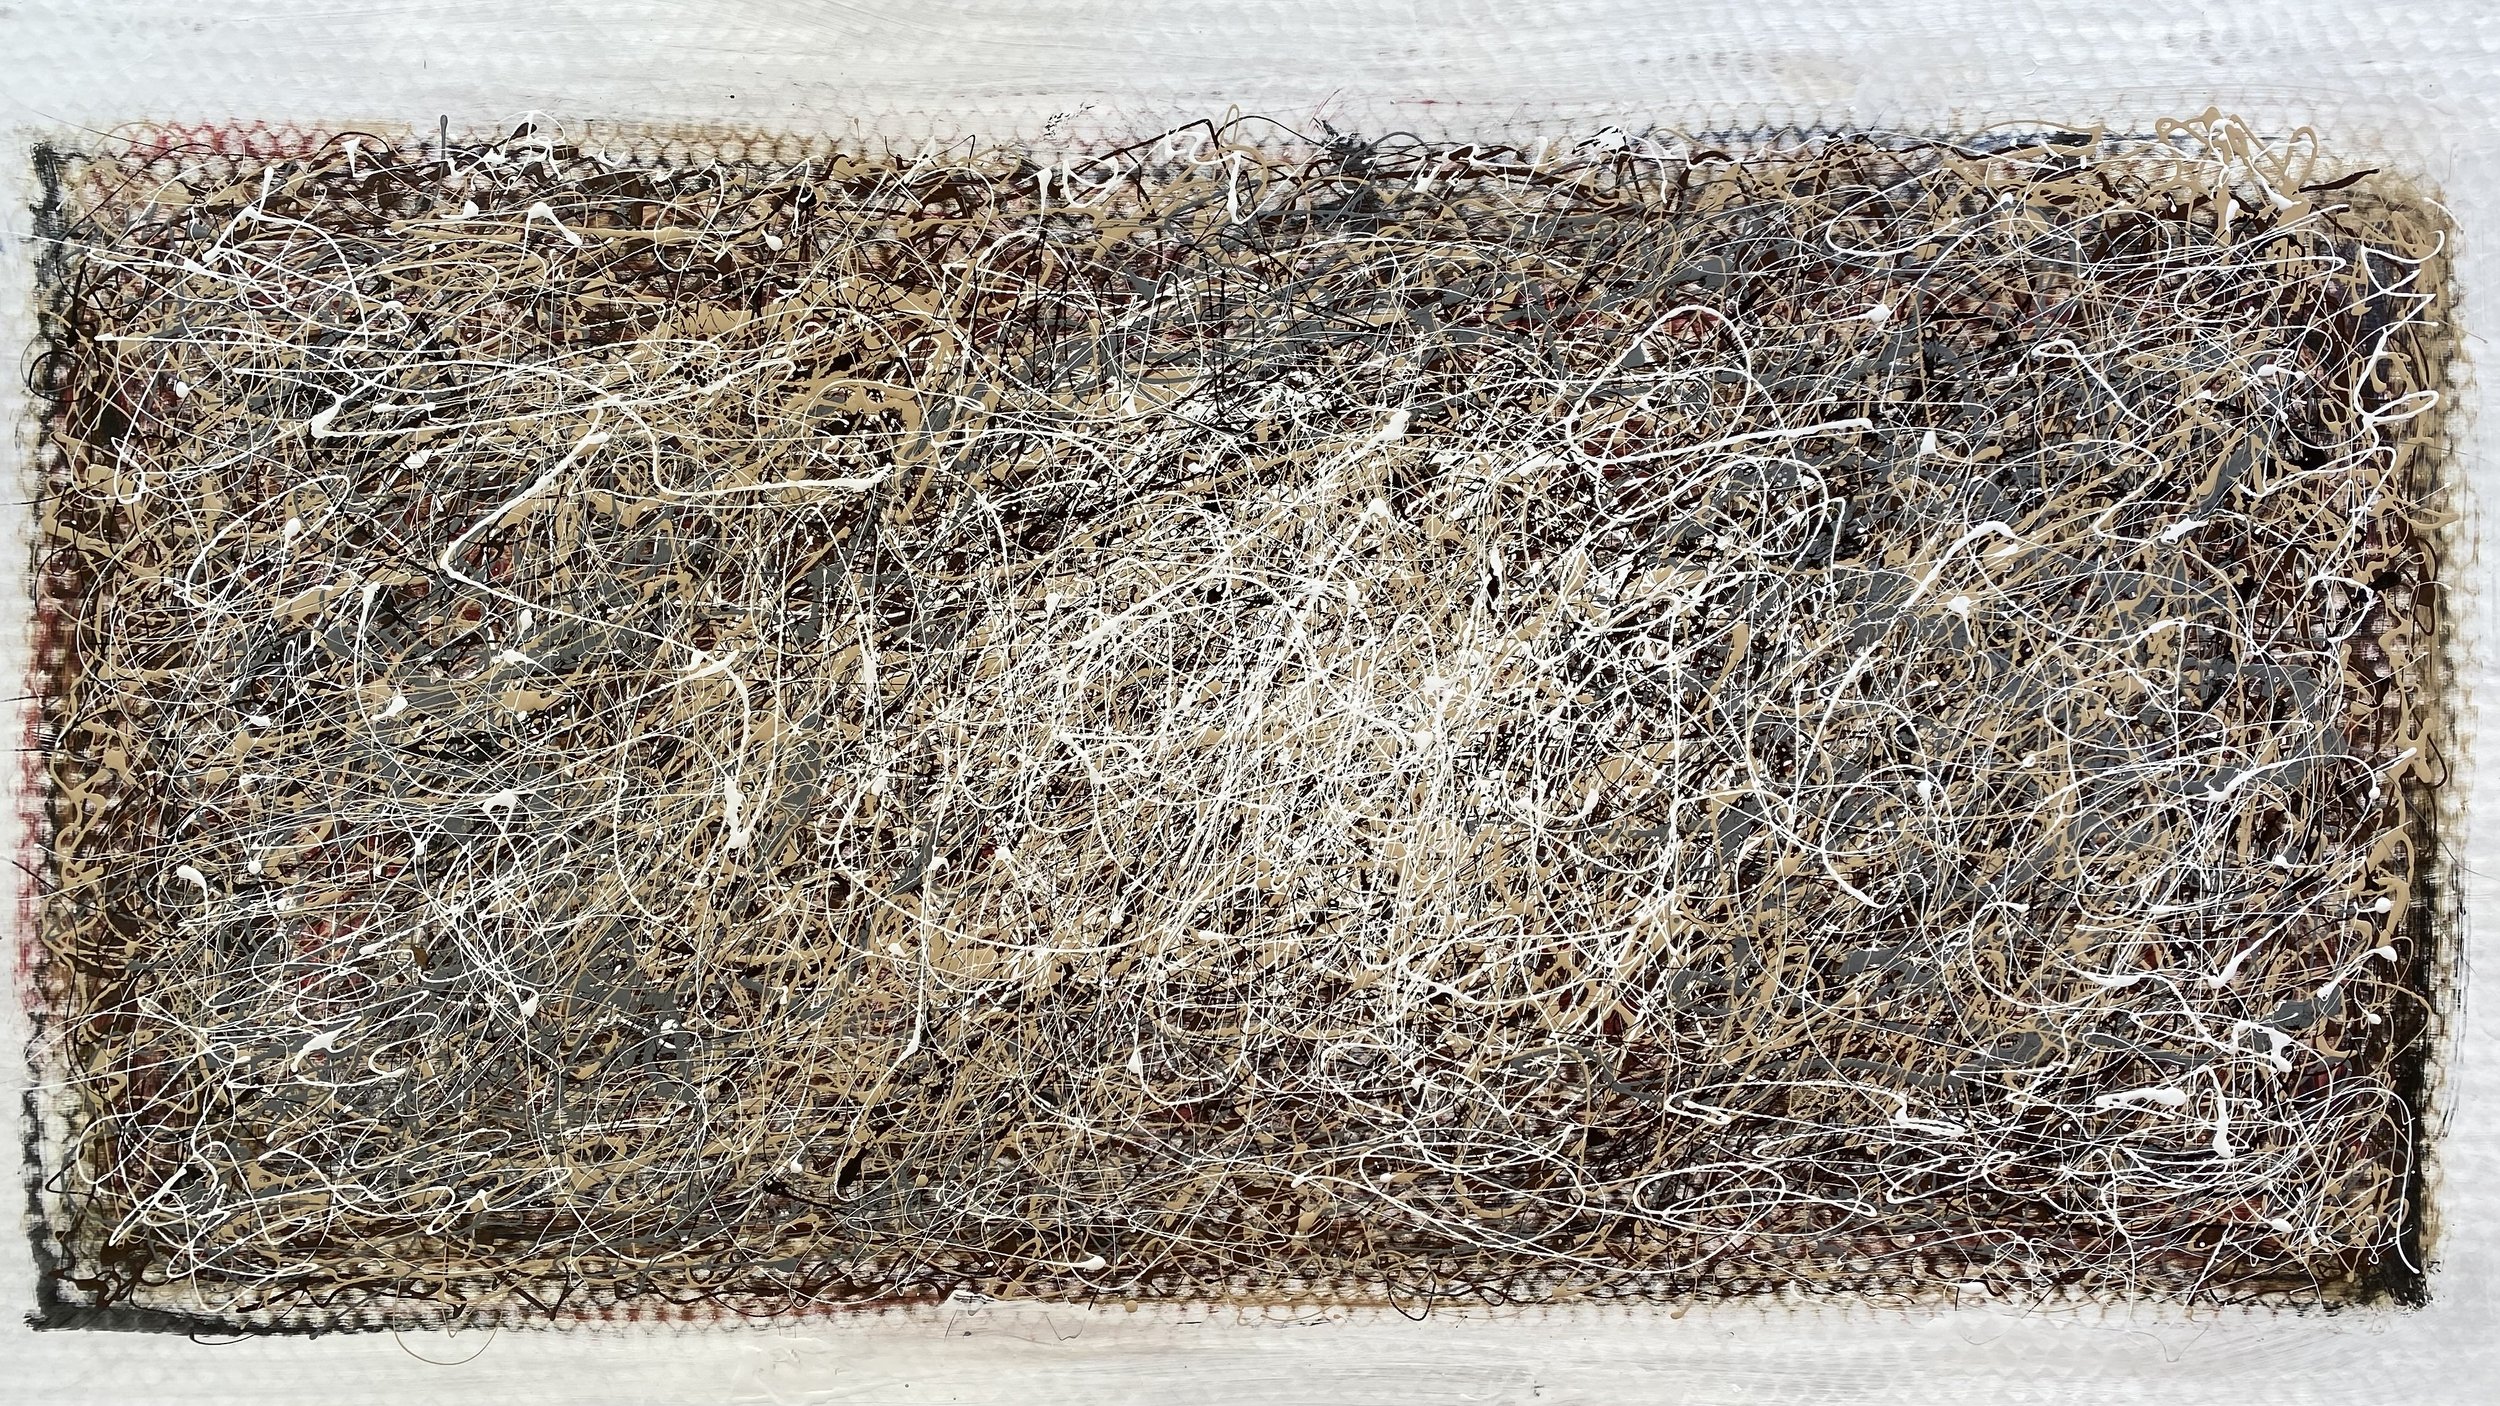 Aaron Warkov, Gathered Energy, Burnished acrylic with enamel on recycled cardboard, 34 x 61 inches $4000